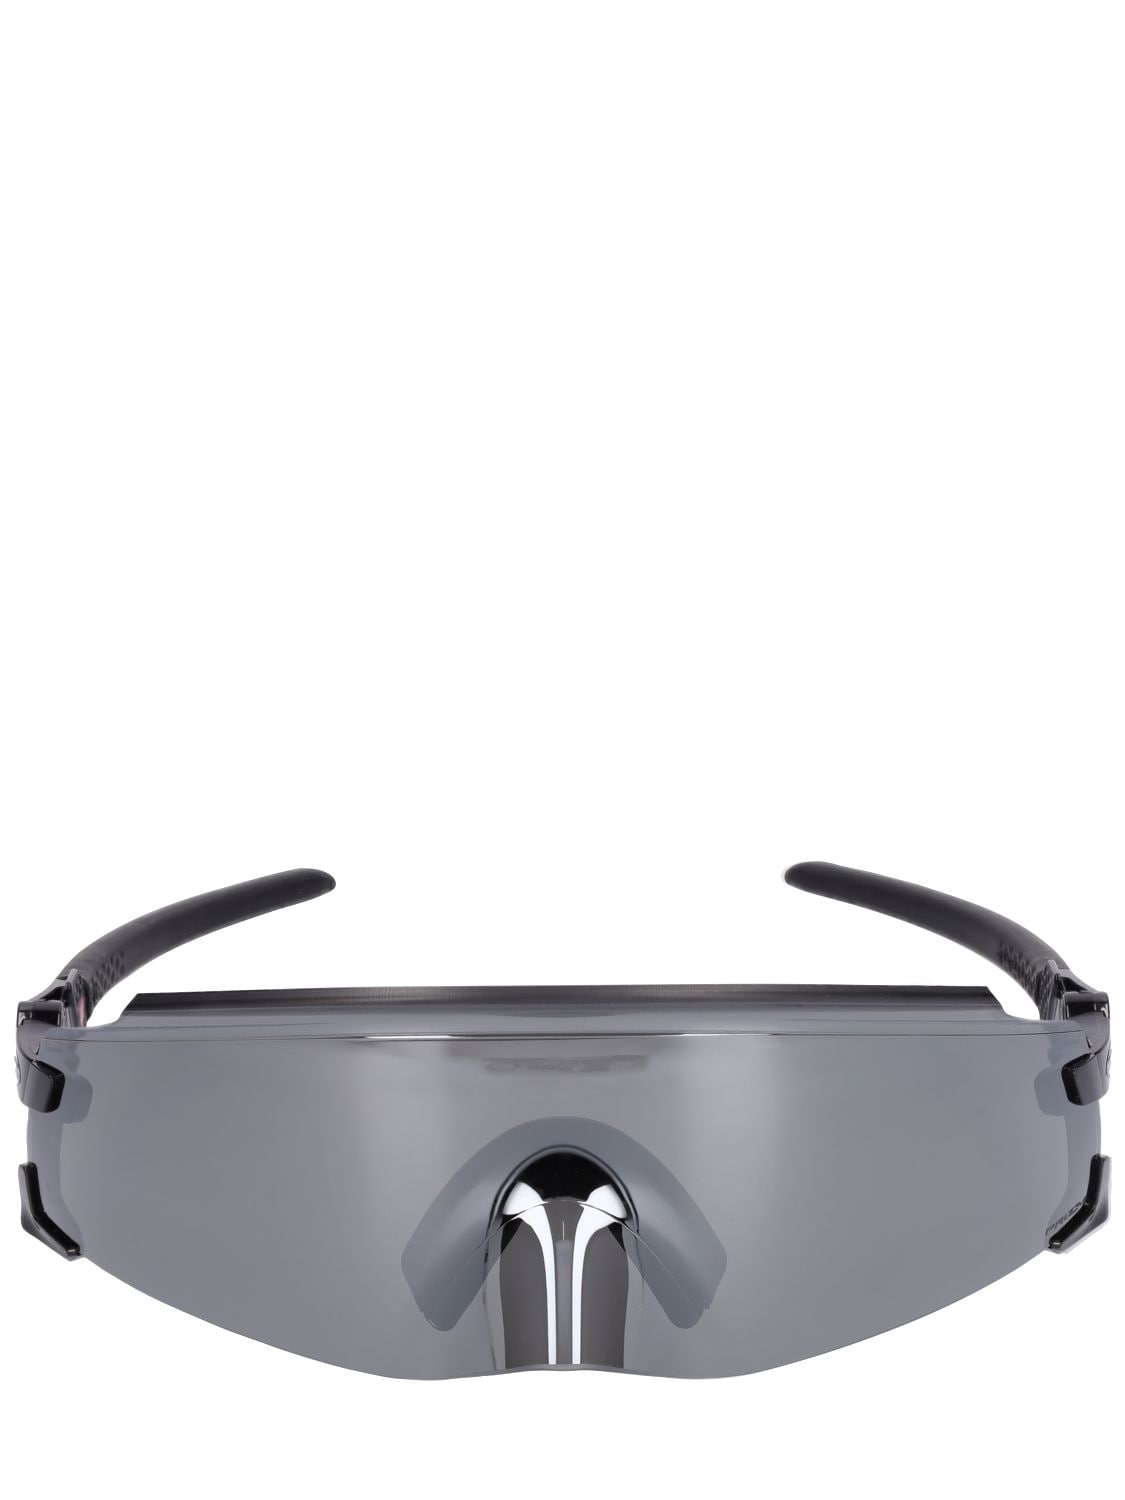 Image of Kato Prizm Mask Sunglasses